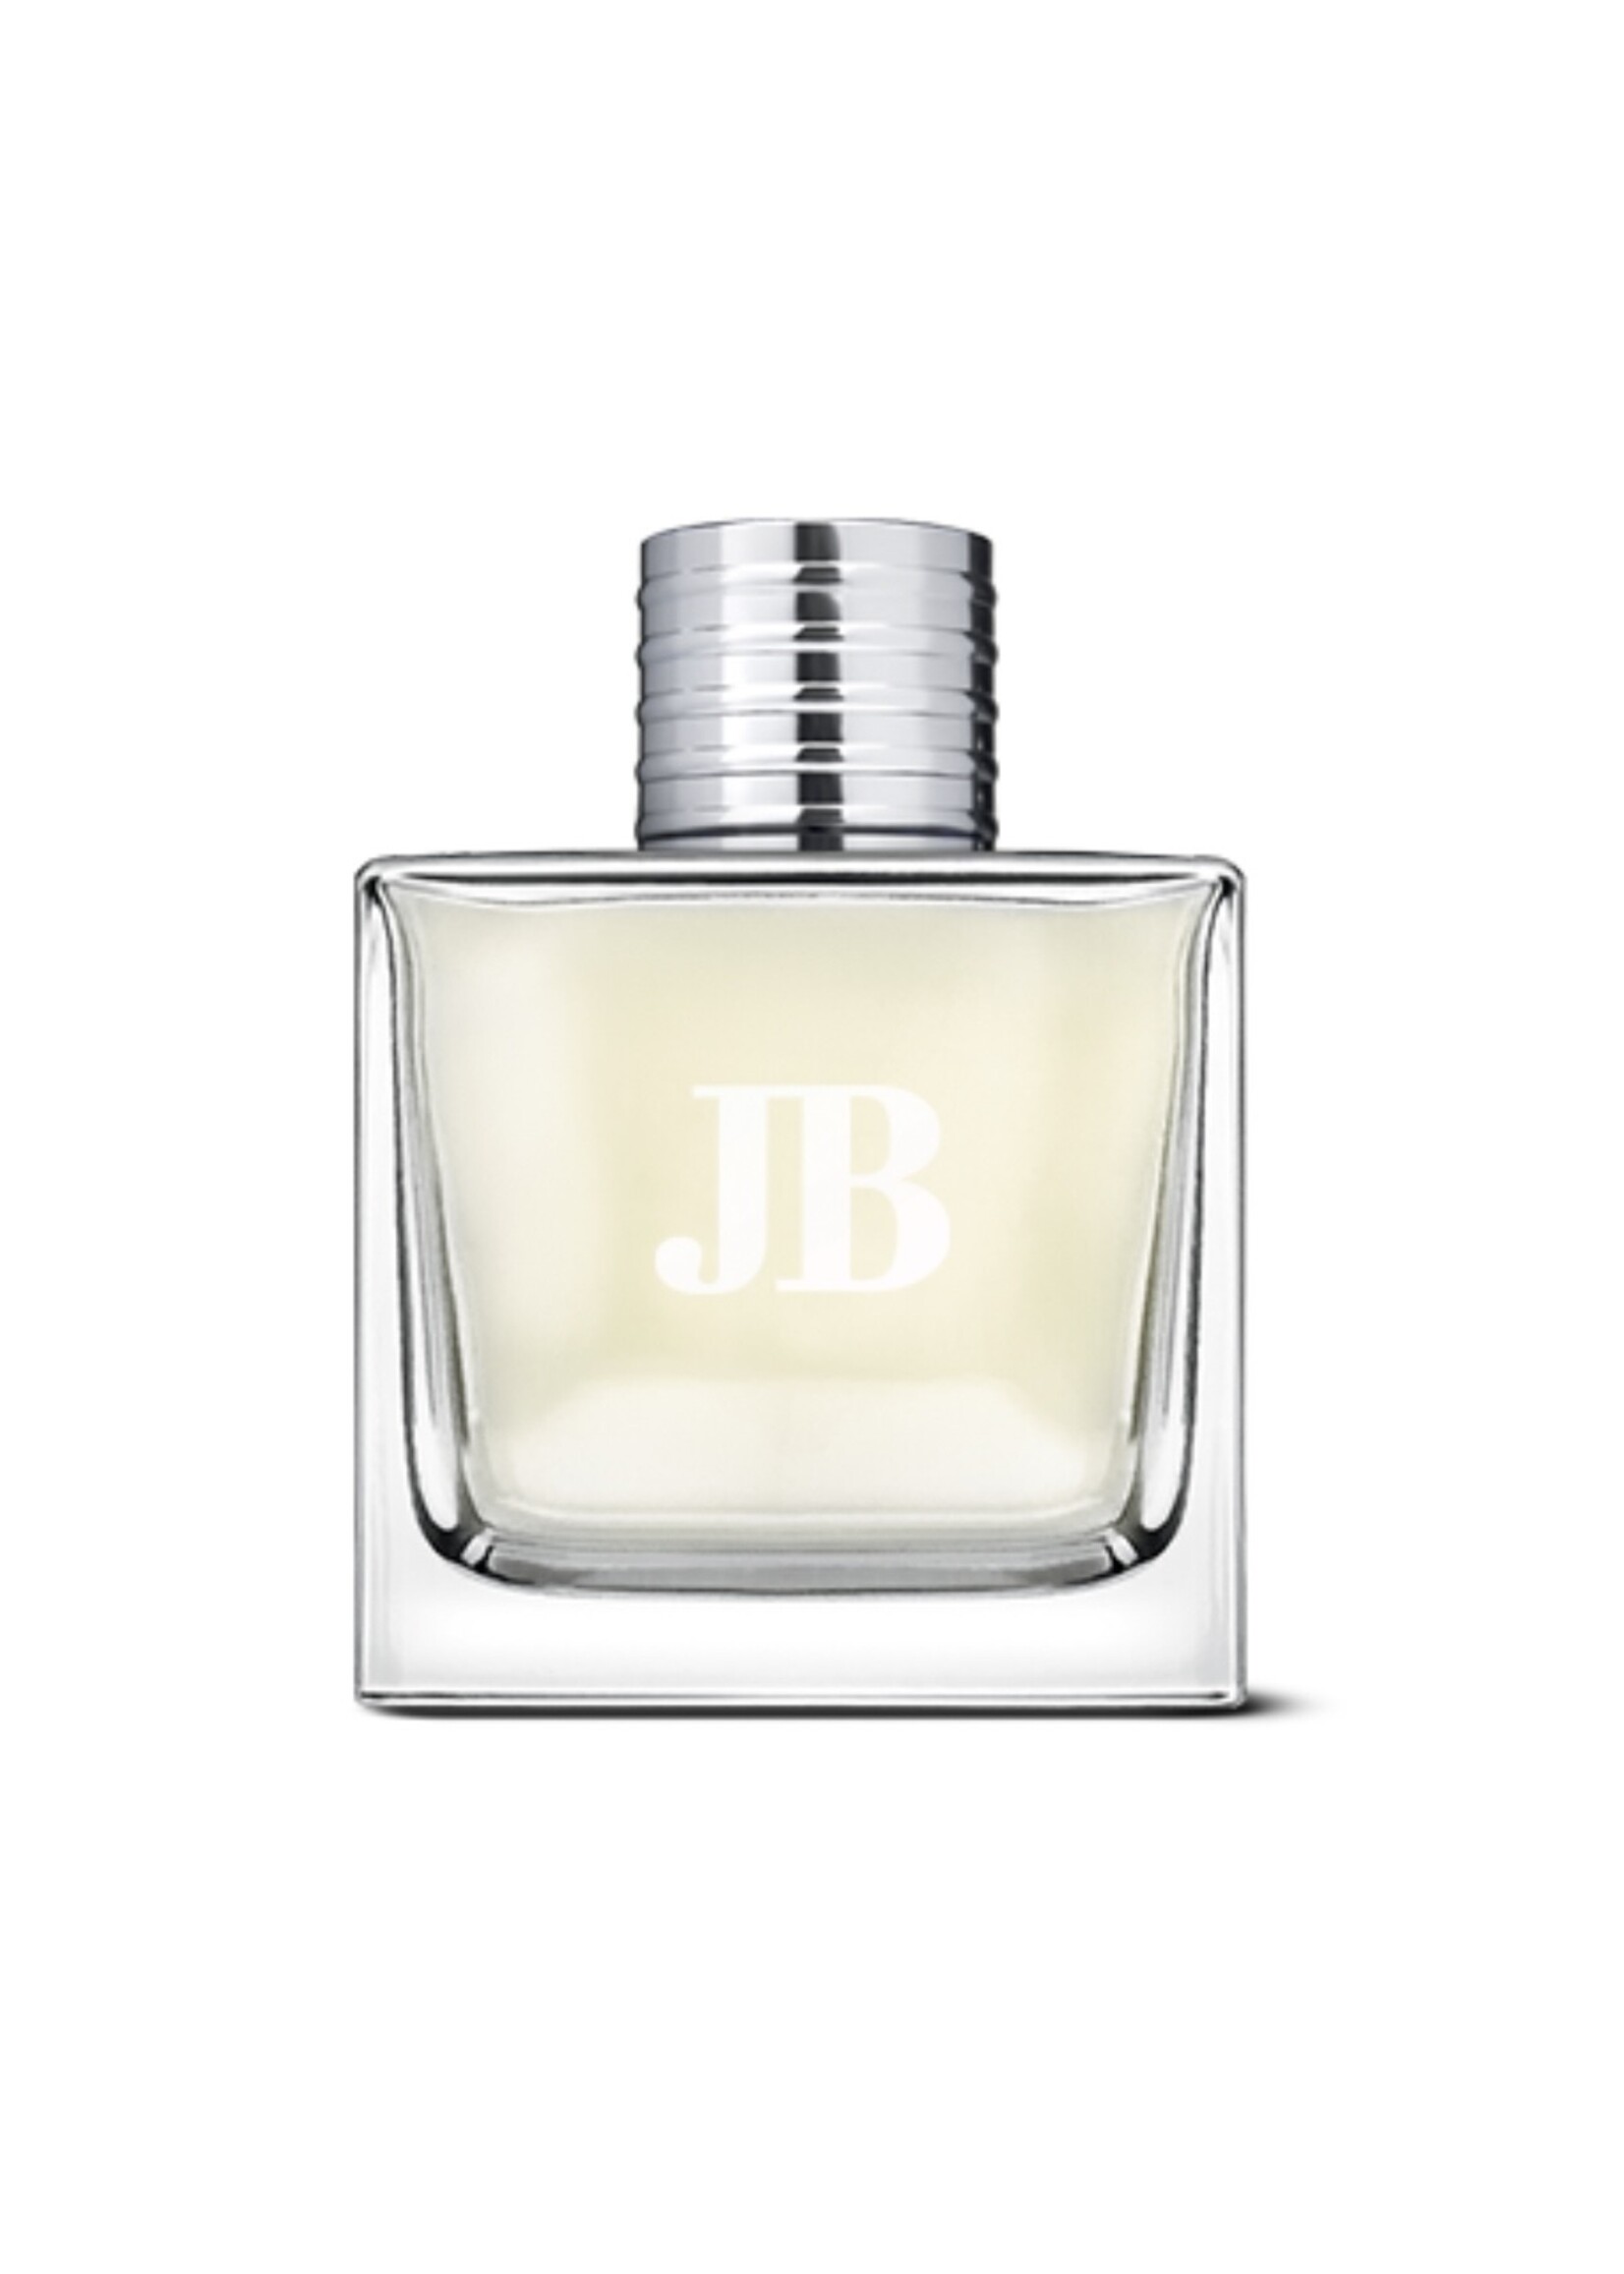 Jack Black Jack Black Eau de Parfum, 3.4 oz Spray